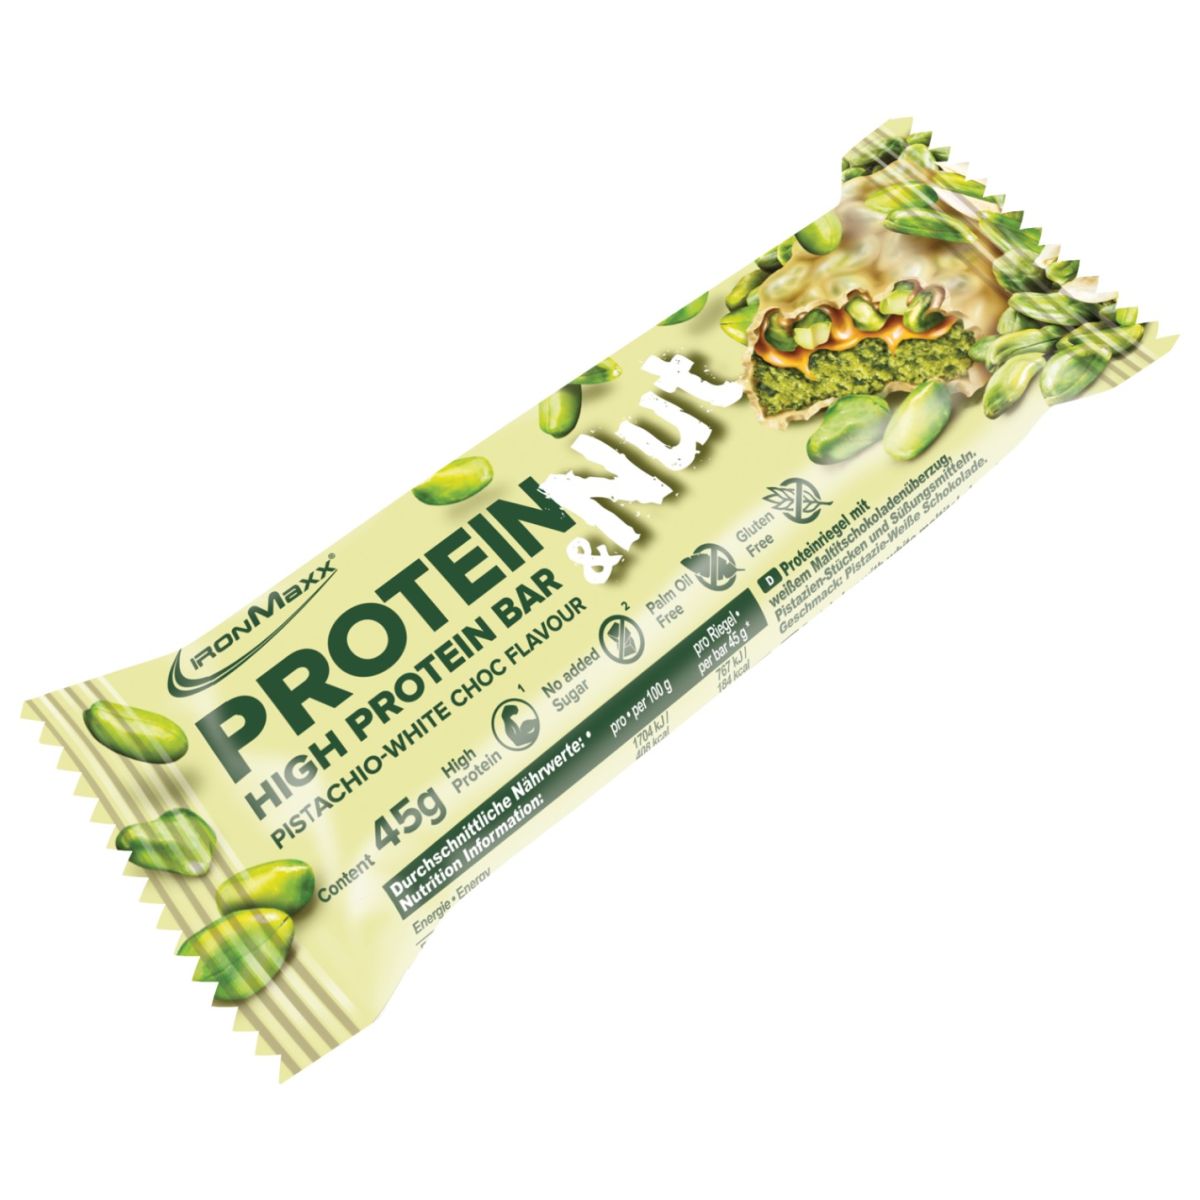 Protein & Nut (45g) - Pistachio-White Choc